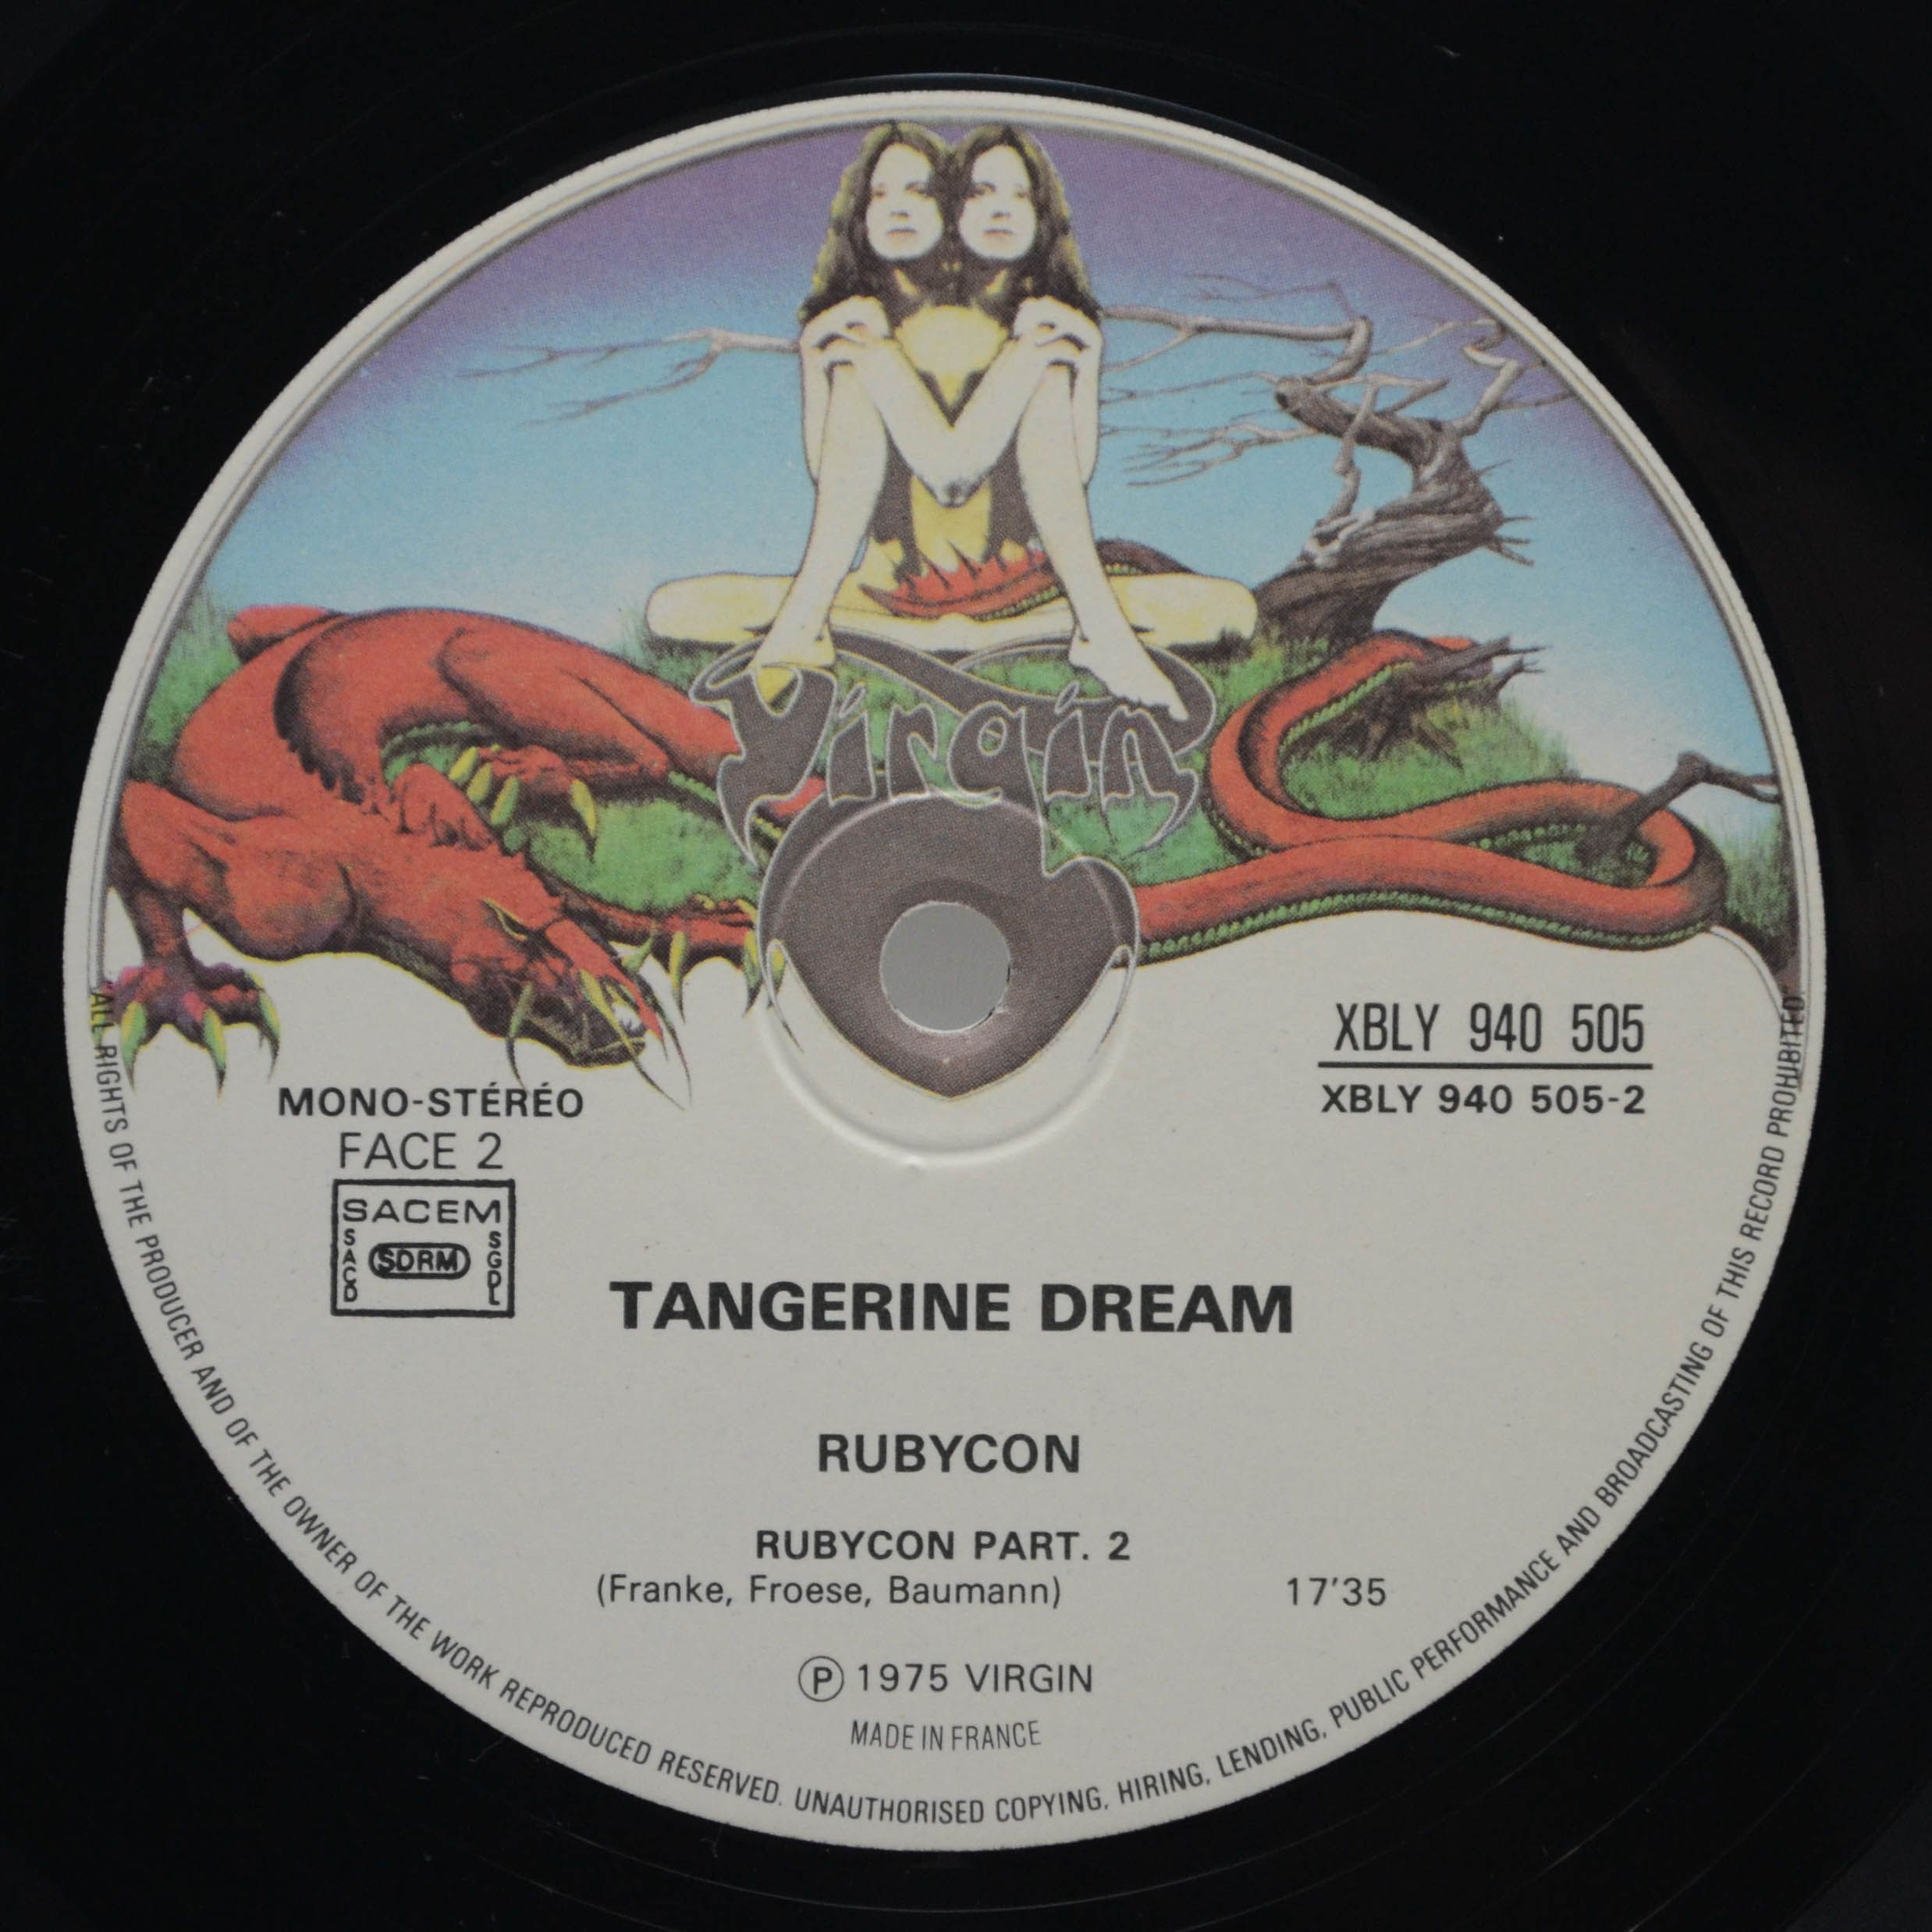 Tangerine Dream — Rubycon, 1975